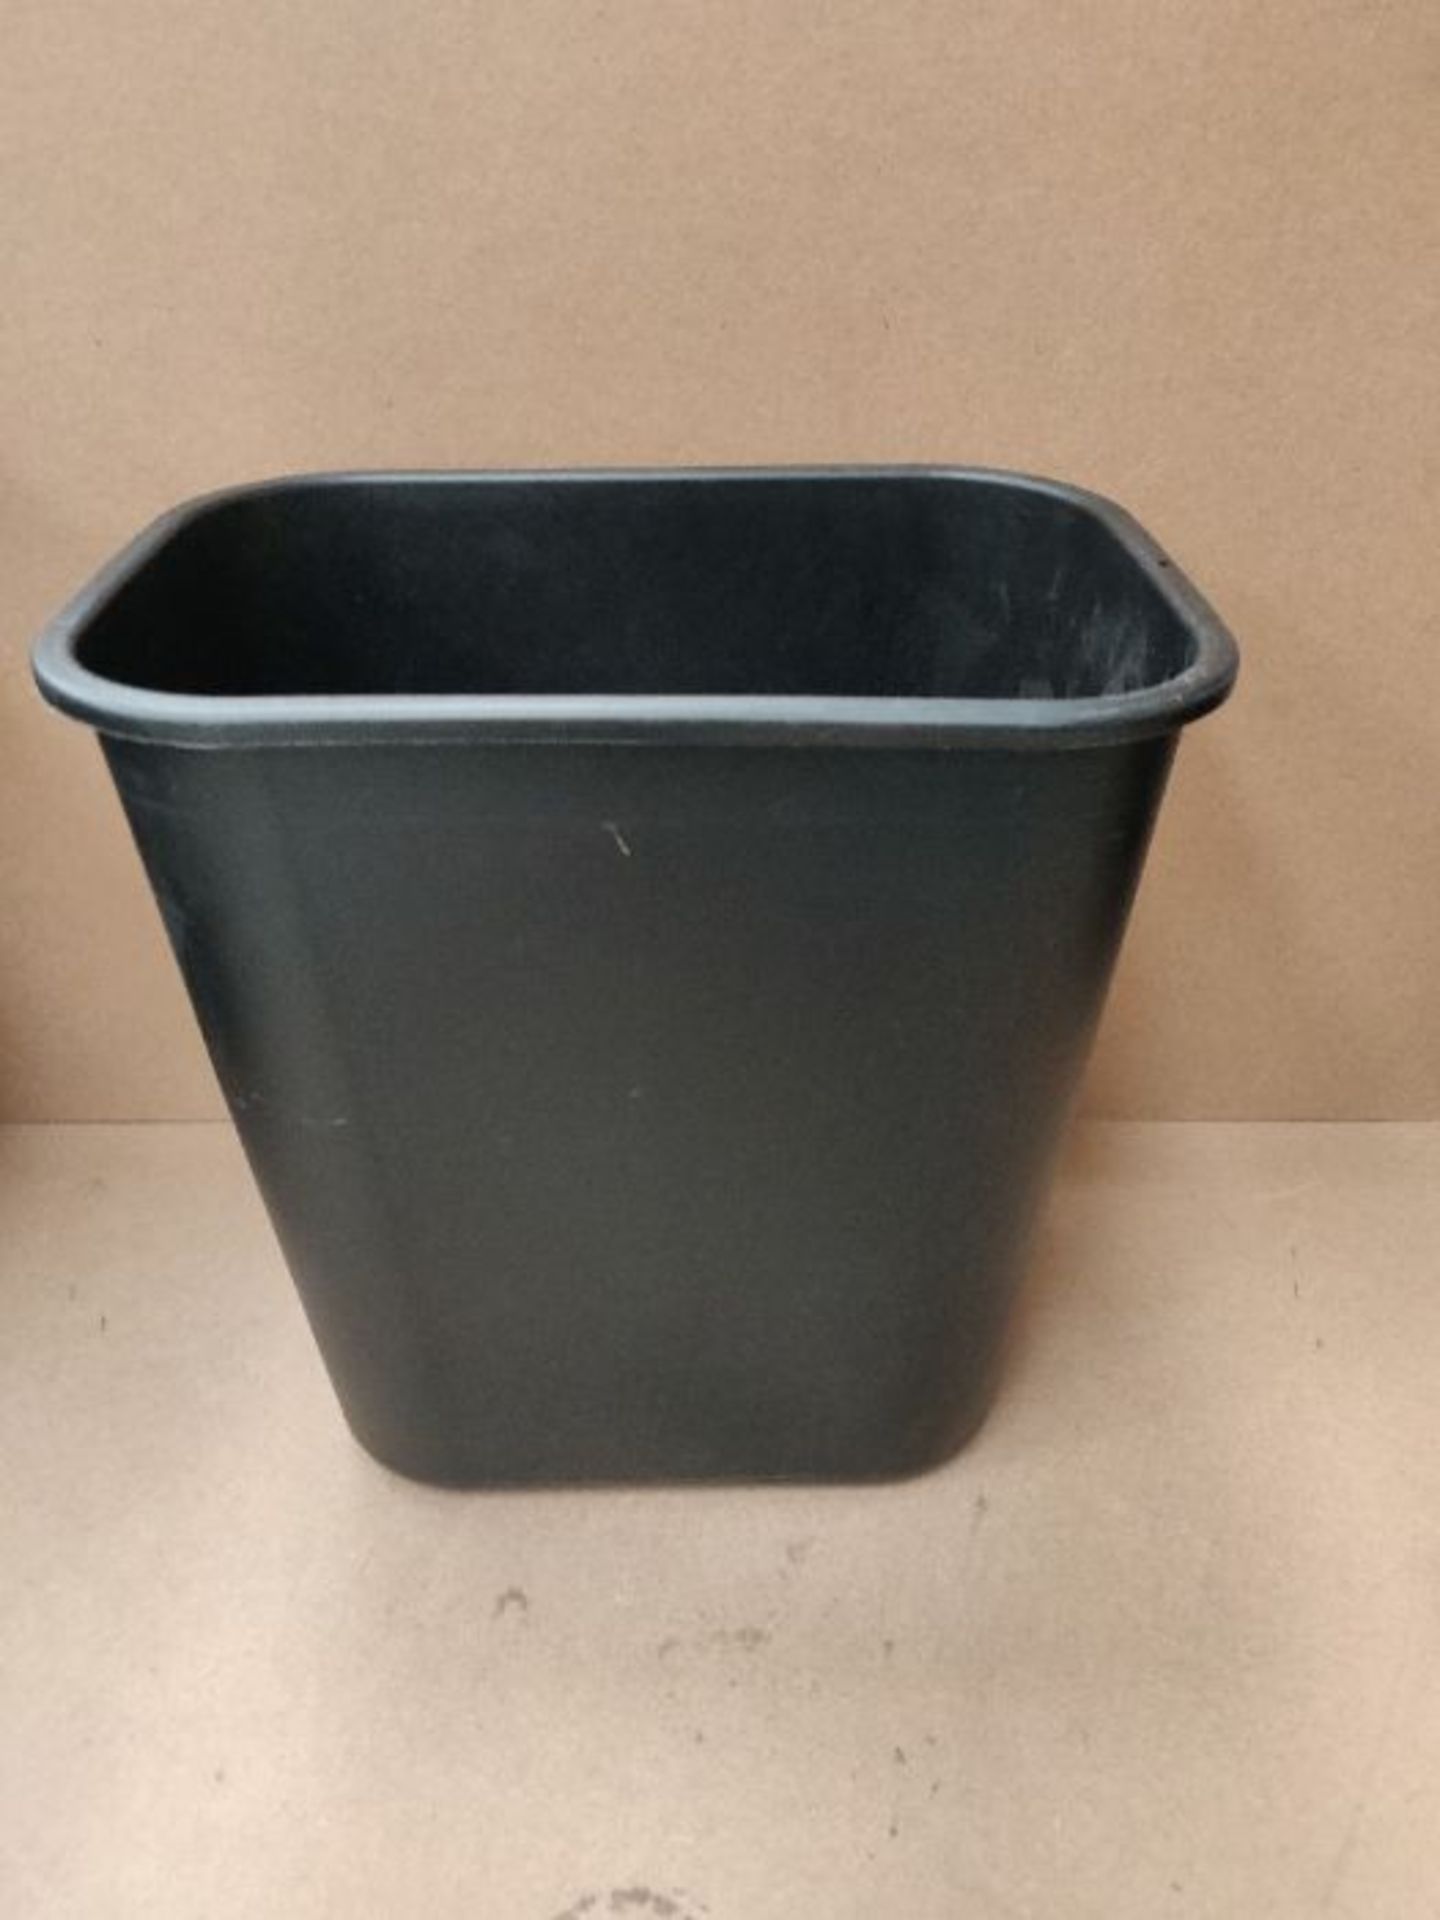 Rubbermaid Commercial Products Wastebasket Medium 26L Black FG295600BLA - Image 2 of 2